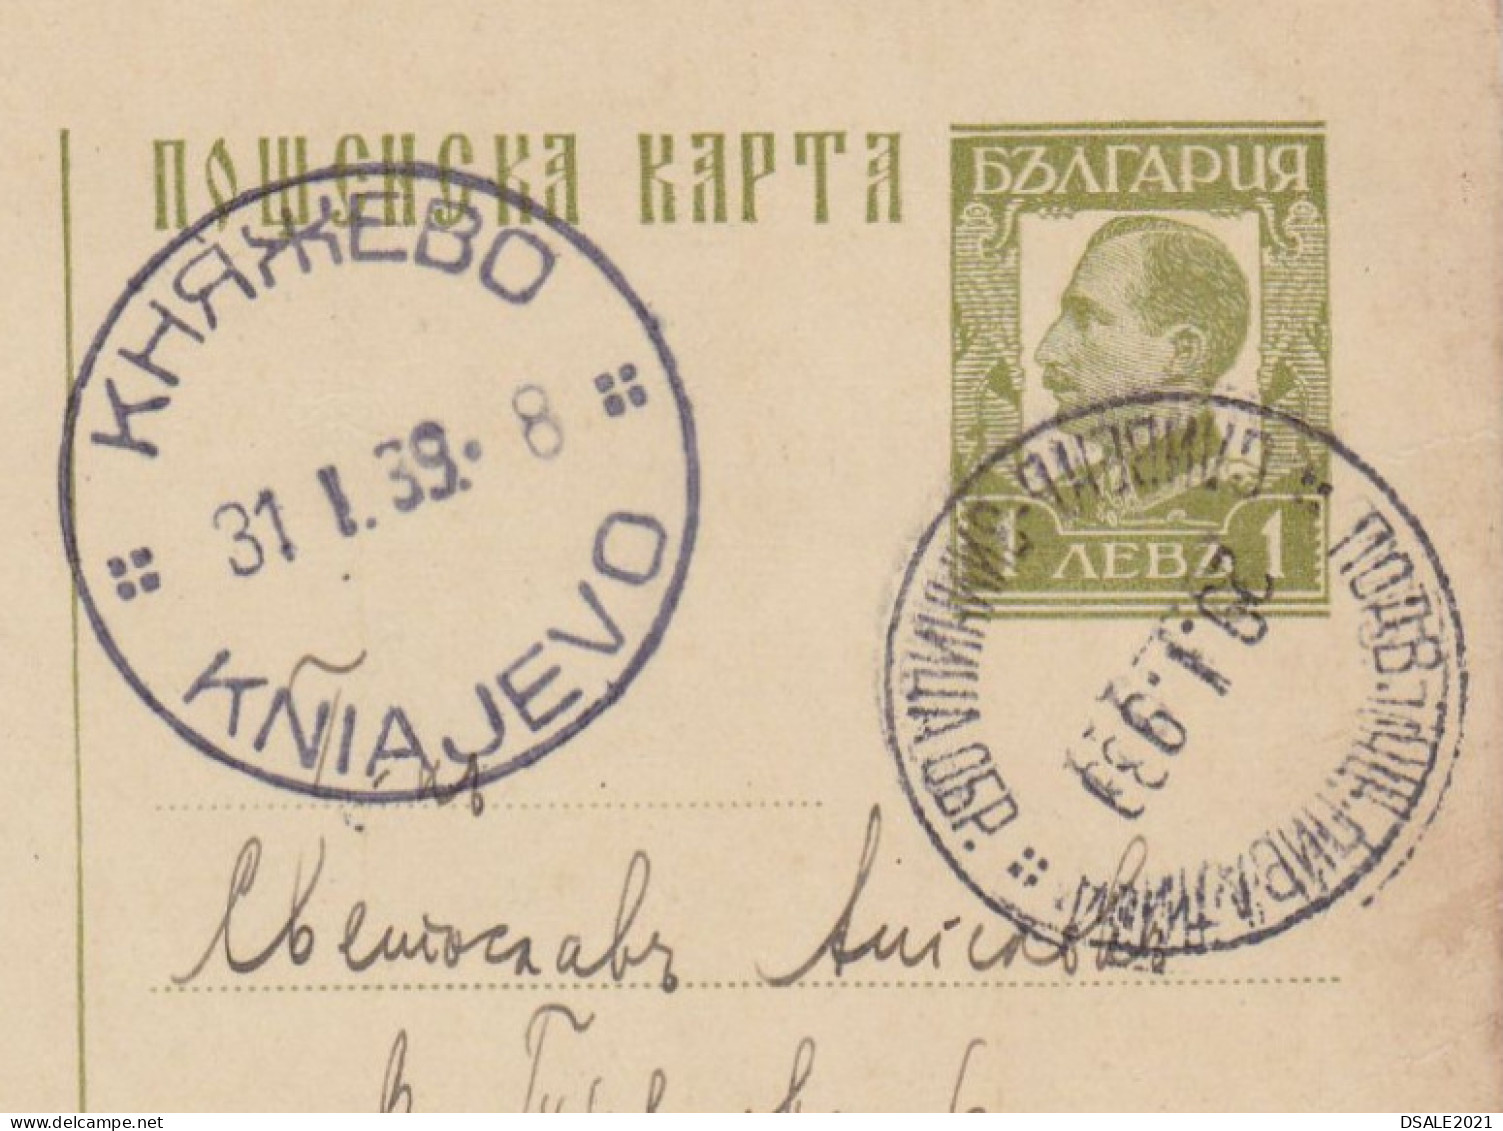 Bulgaria Bulgarie Bulgarian Postal Stationery Card, 1939 Sent Via Railway TPO Zug Bahnpost (SLIVEN-ZIMNITZA Back) /699 - Postcards